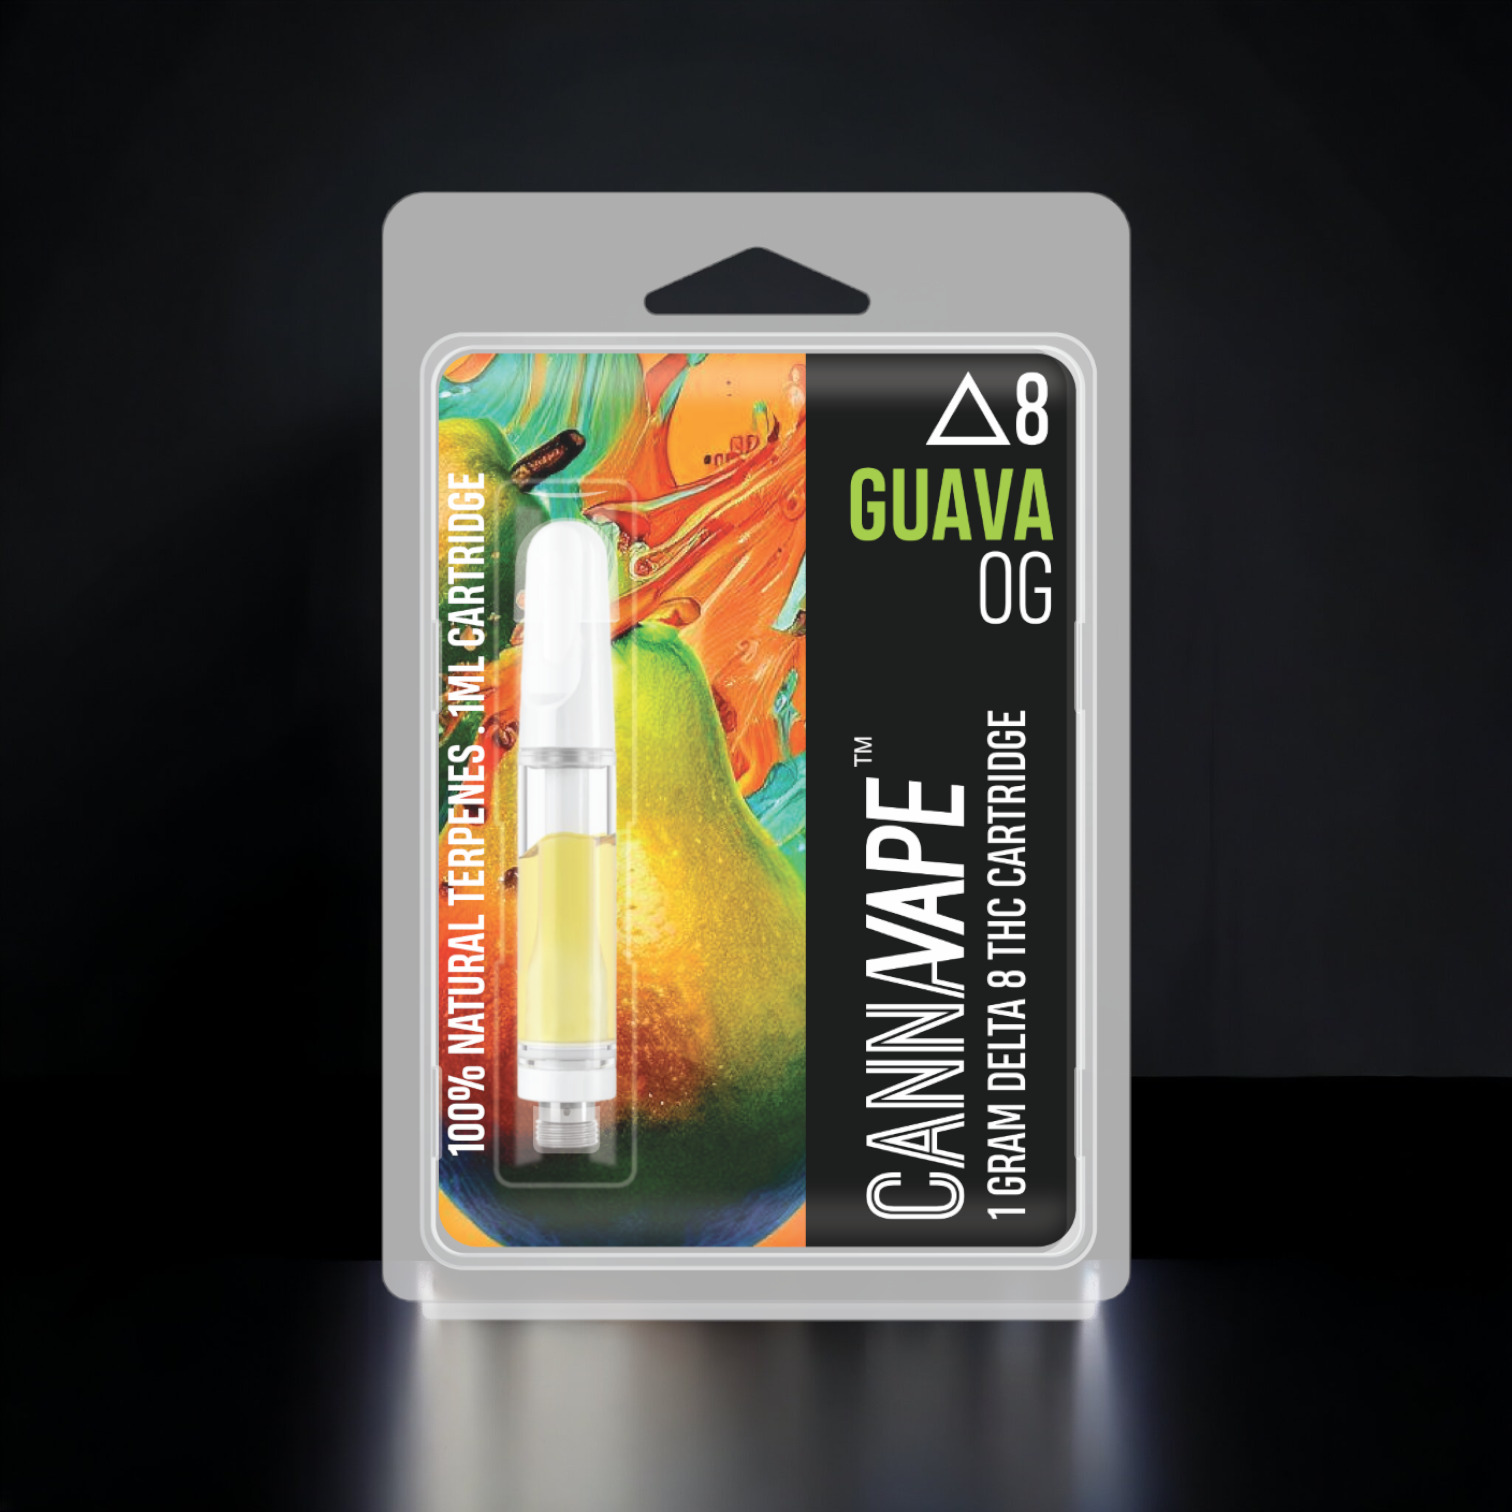 Guava OG Delta 8 Vape Cartridge